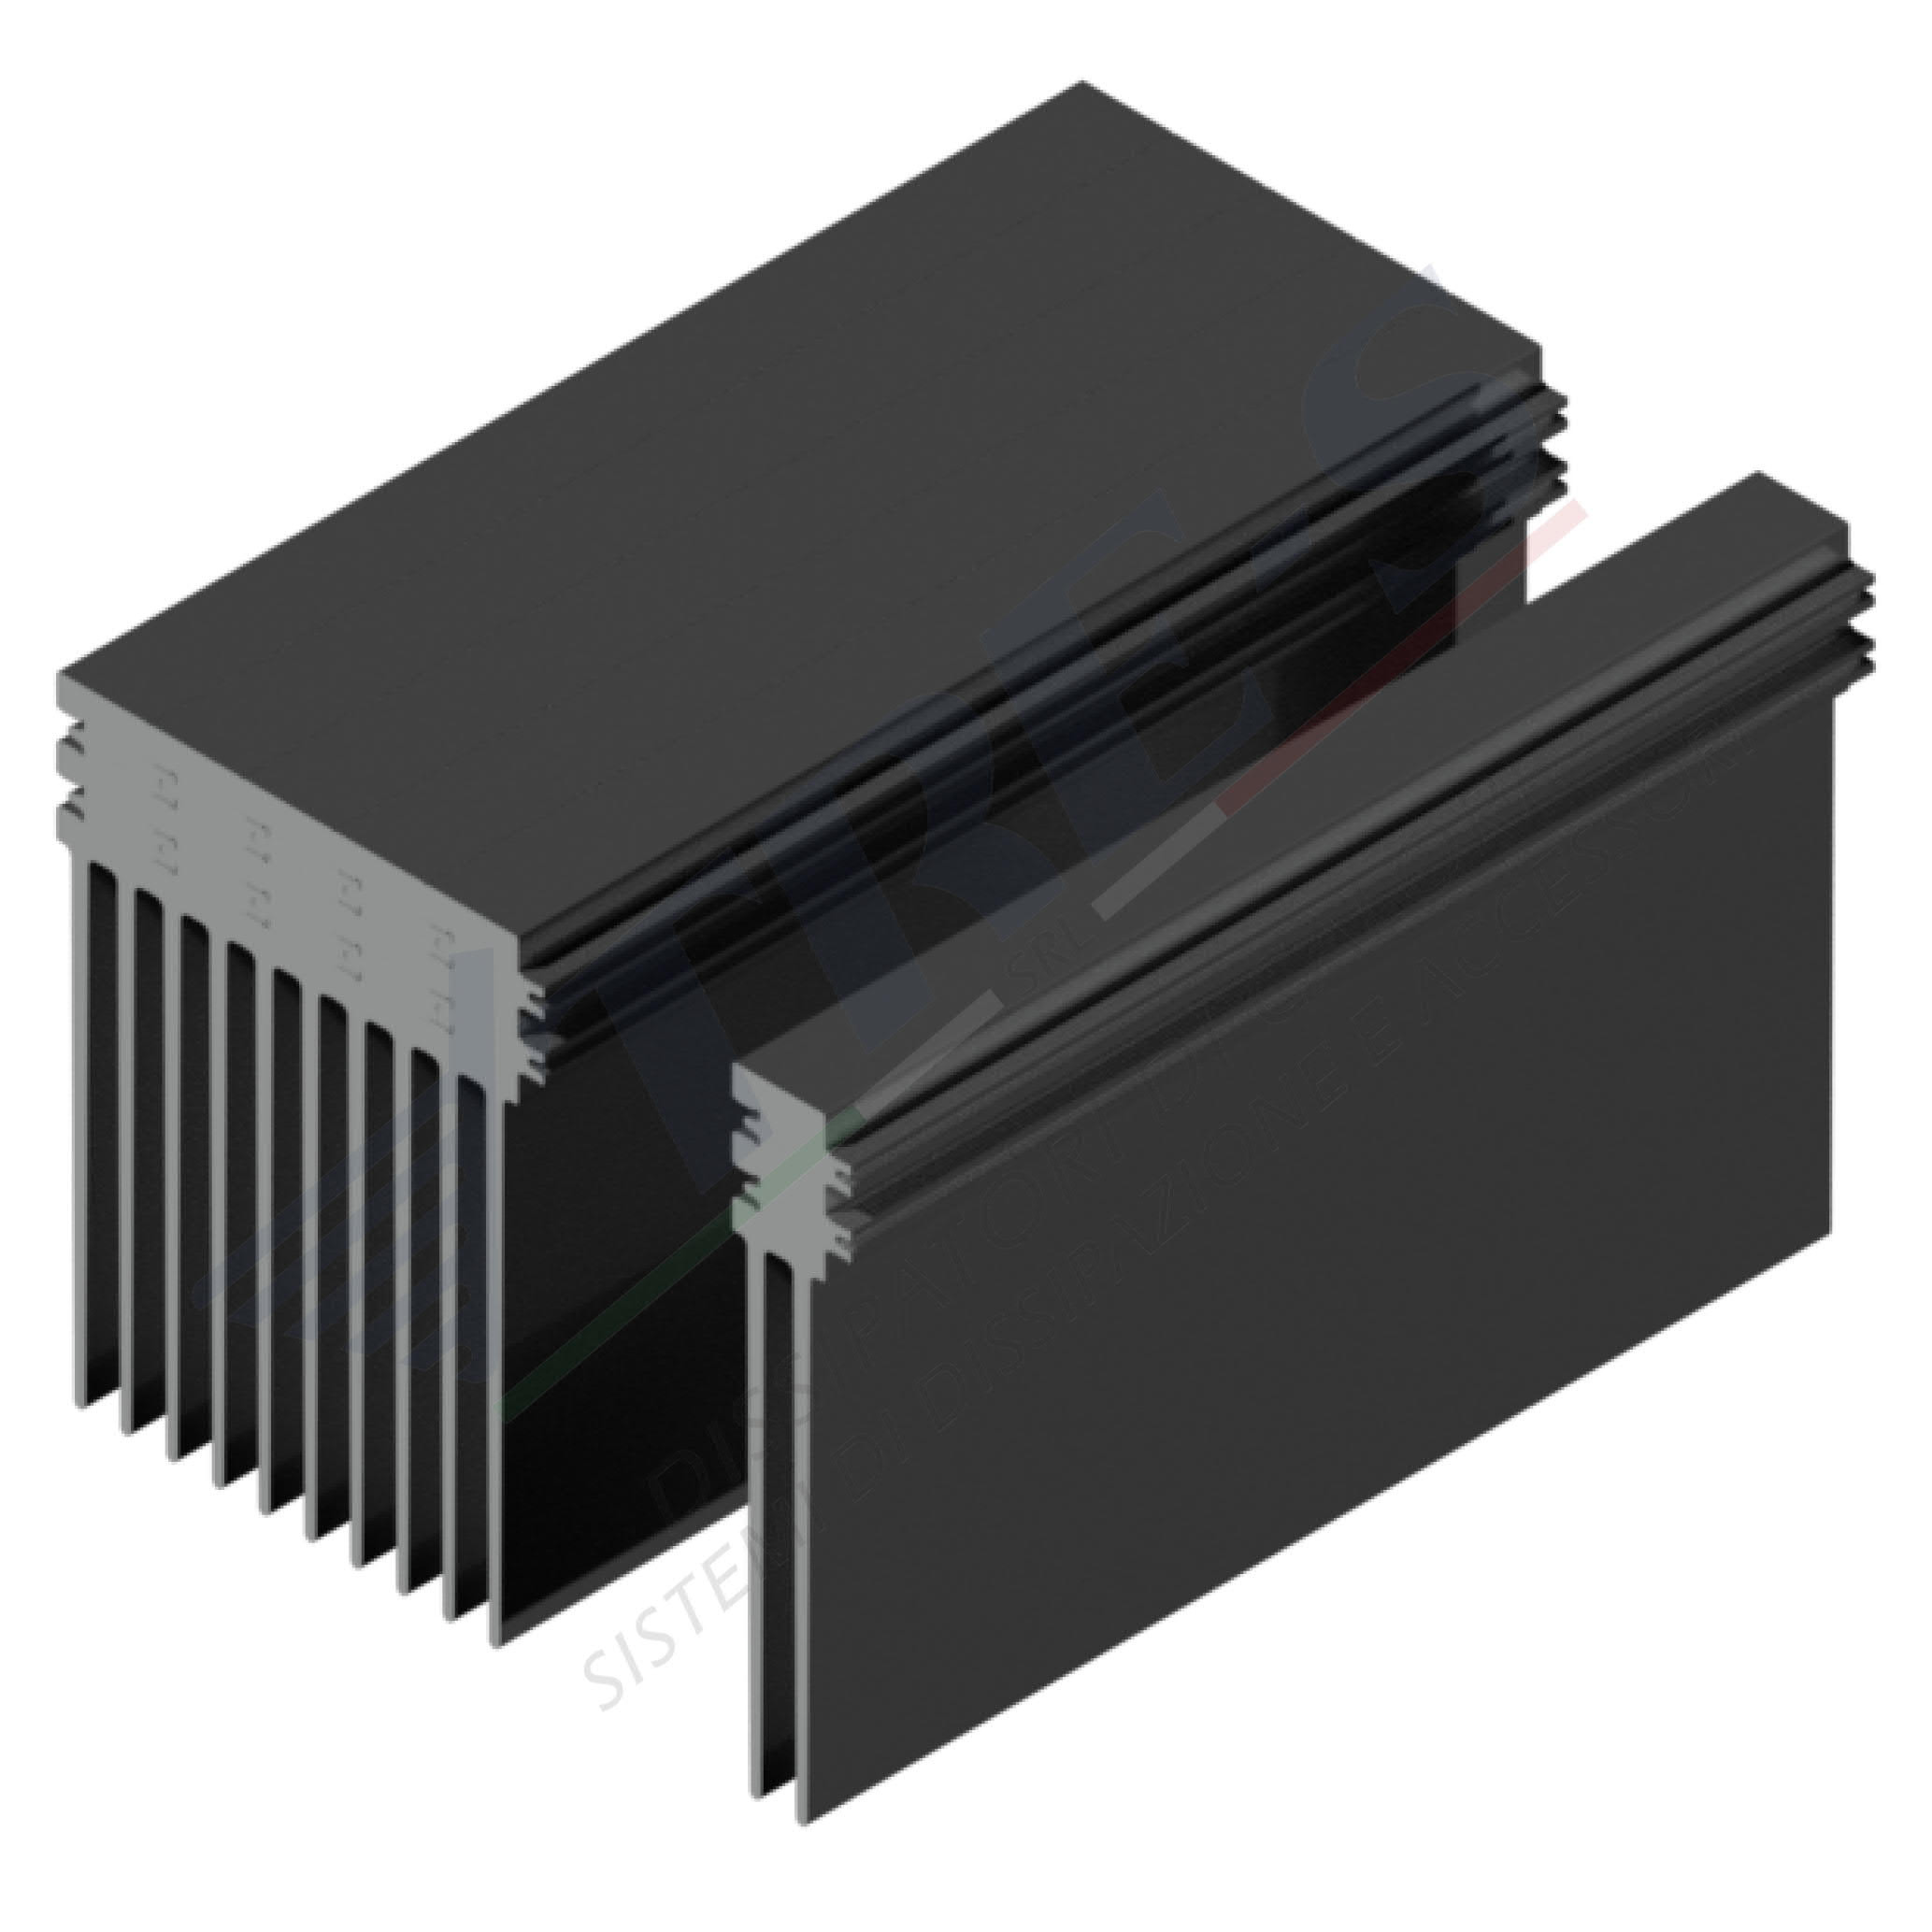 PRI1026 - Embedded heat sinks